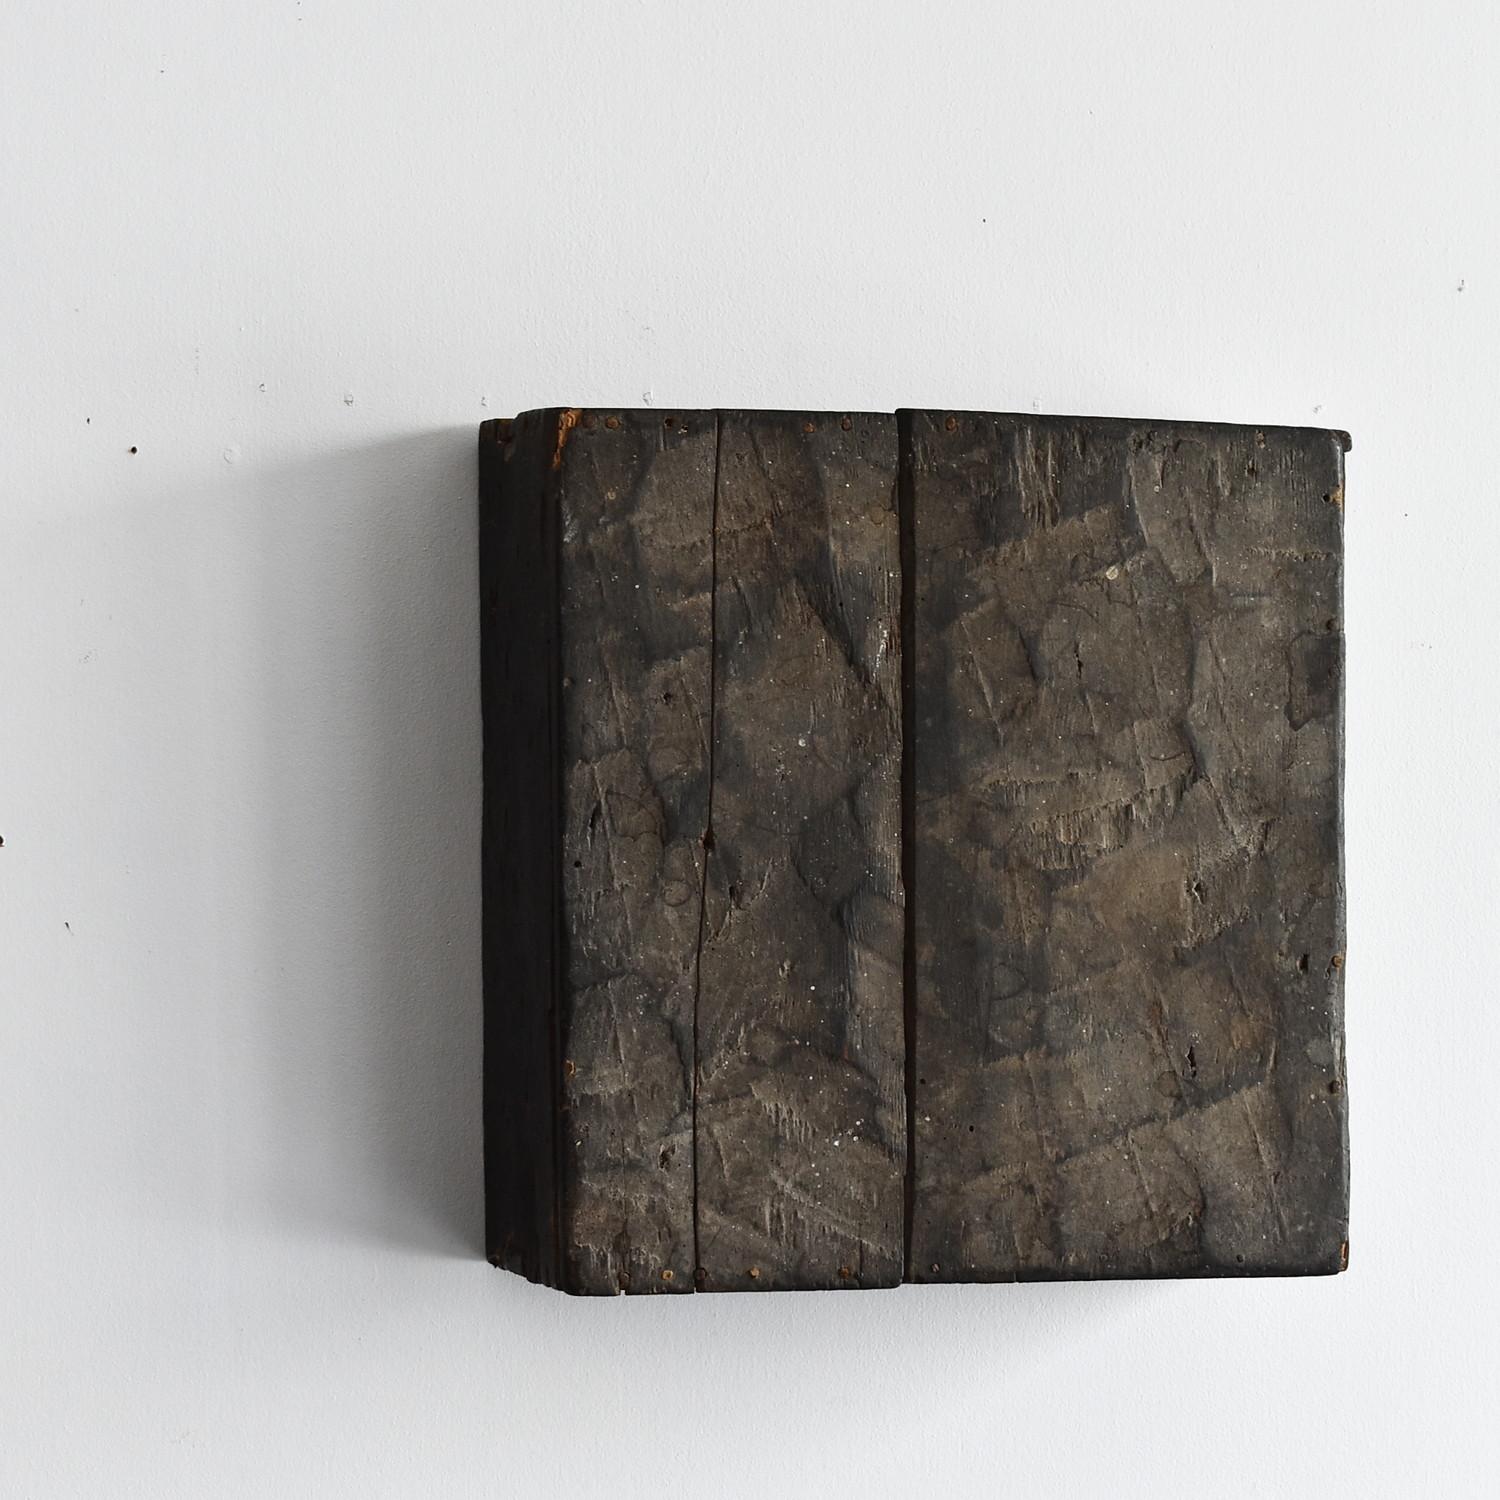 Japanese Edo Period '18th-19th Century' Wooden Box Lid 10